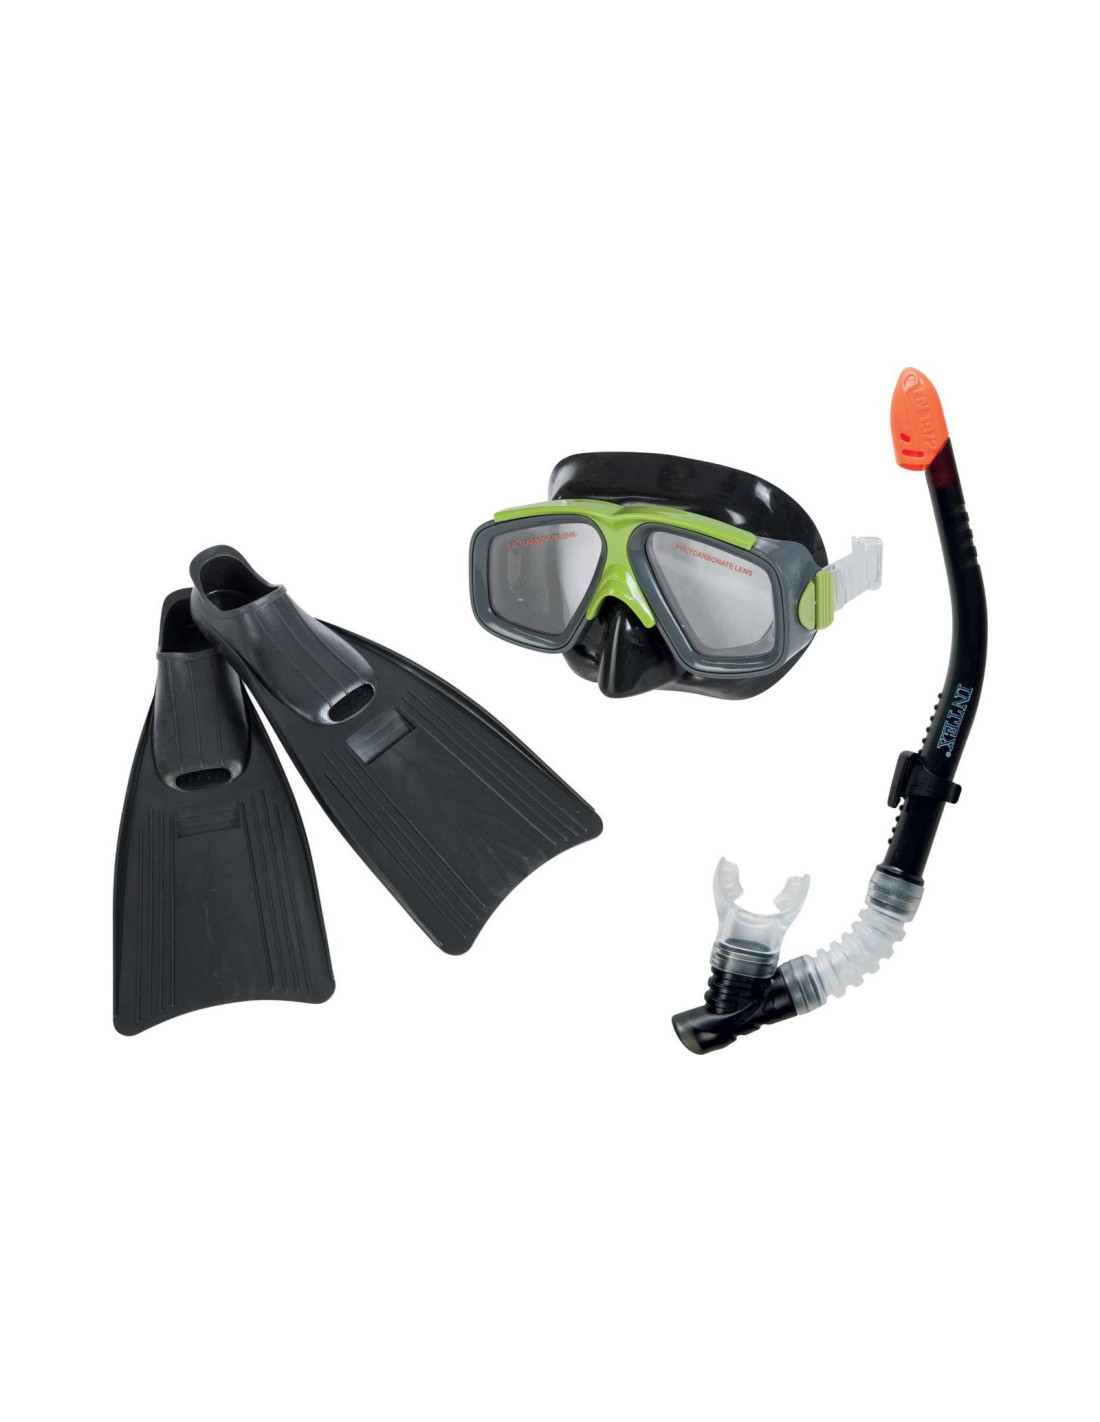 Ласты маску трубку. Набор для плавания (маска, трубка и ласты) Intex 8+. Маска для плавания Intex 55981. Интекс маска для подводного плавания с трубкой. Набор для плавания Intex 55657.